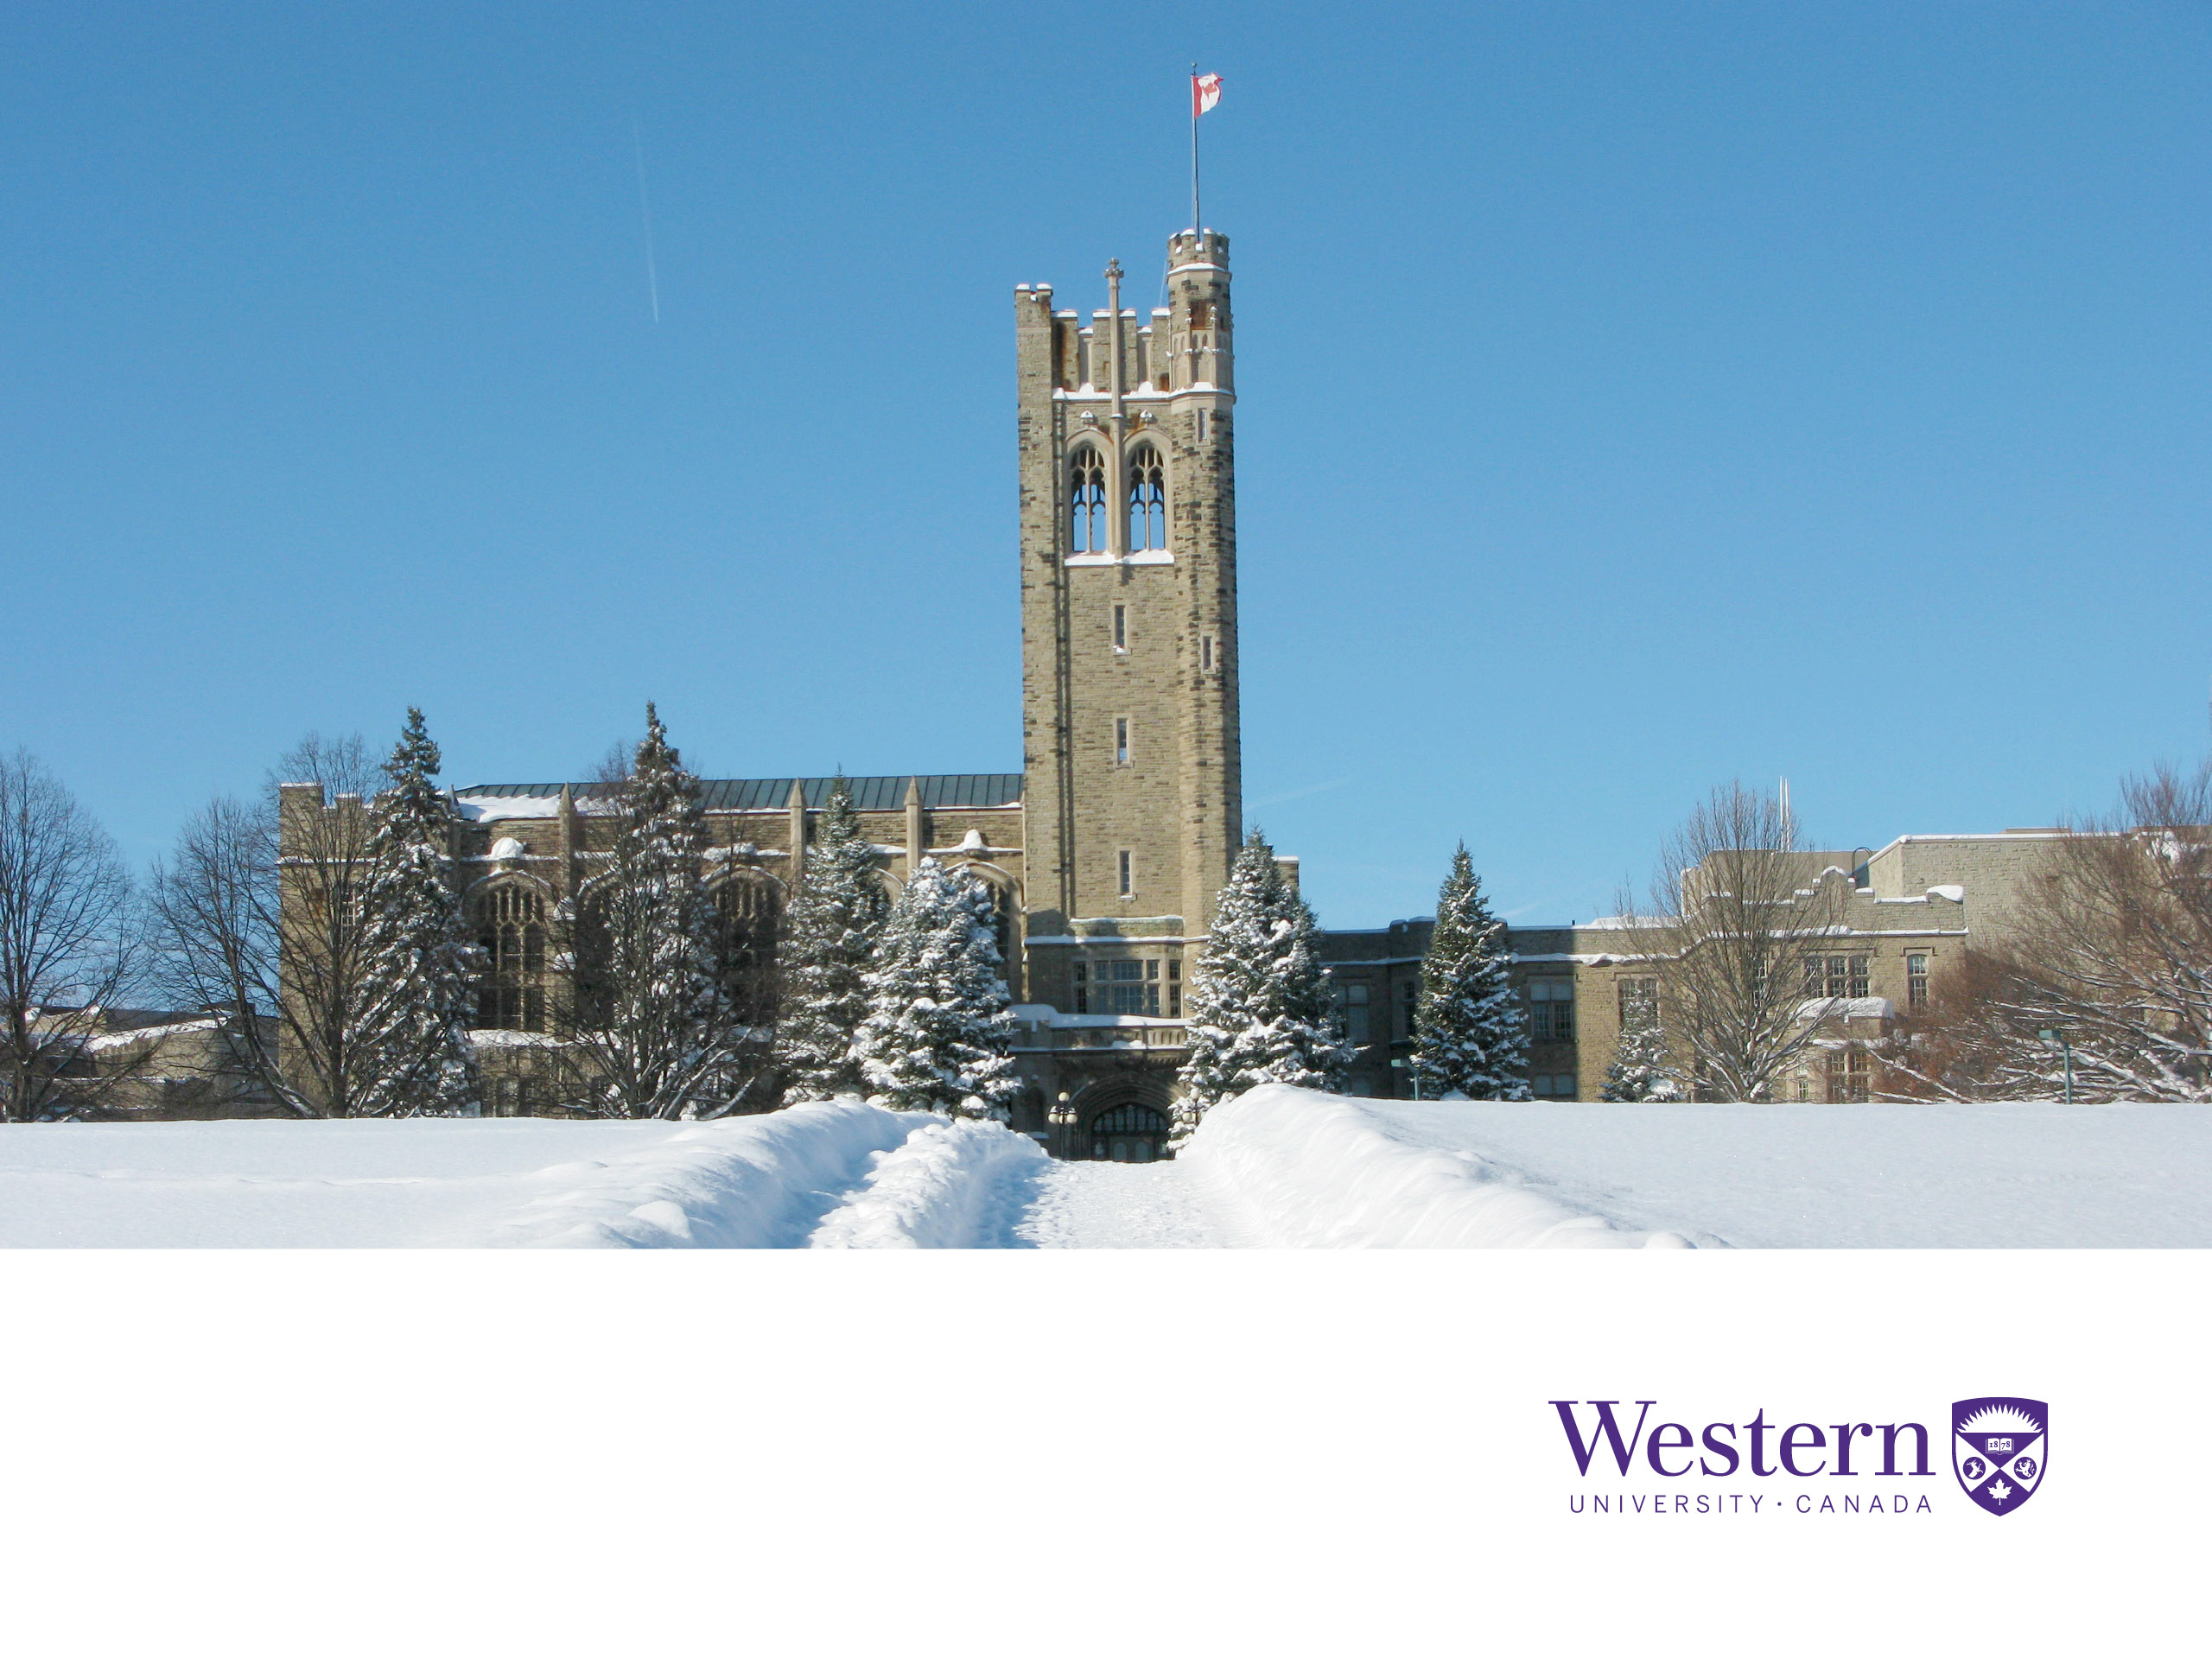 Western Spirit University